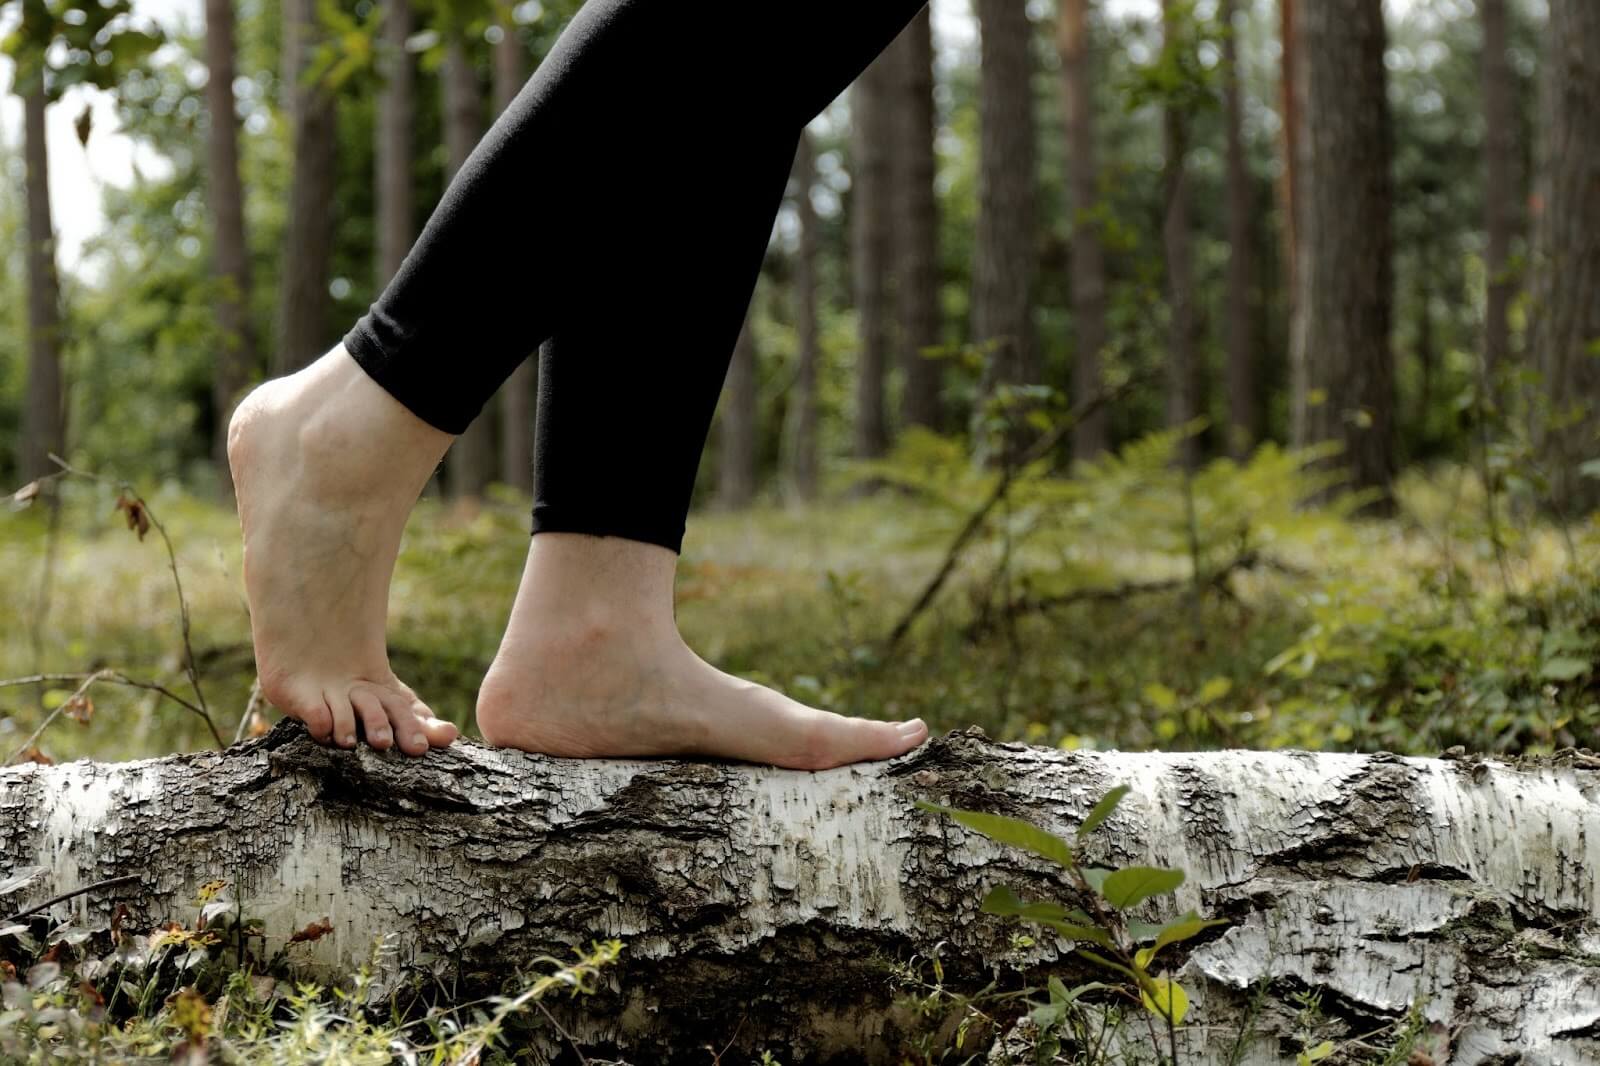 https://xeroshoes.com/wp-content/uploads/2012/11/How-To-Walk-Barefoot.jpg